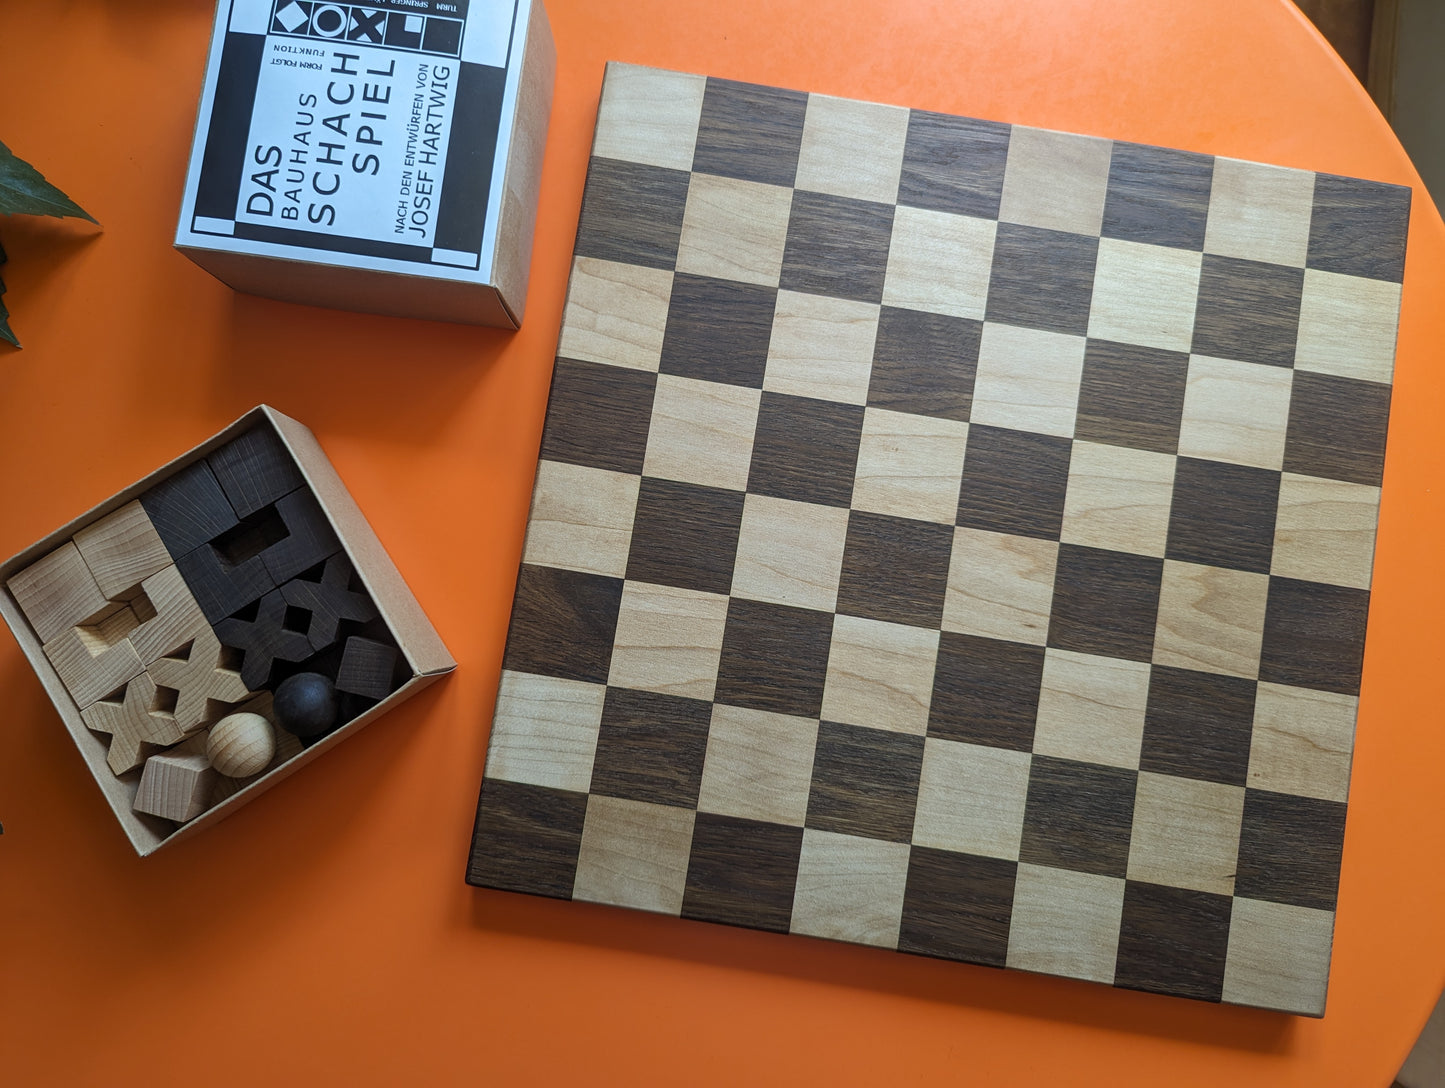 Handmade wood Bauhaus chess set. Oak&maple wood.